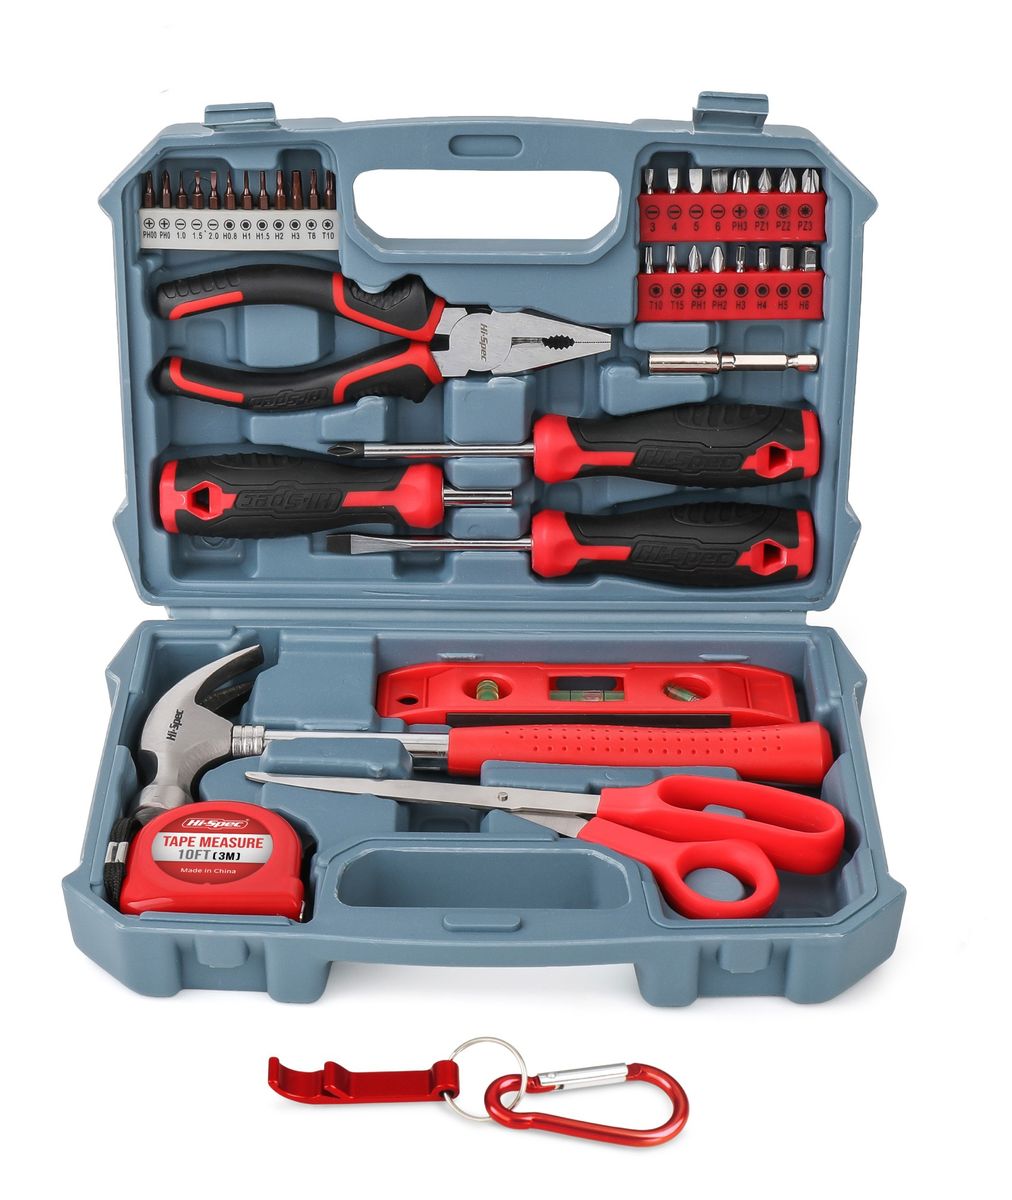 Hi-Spec 42 Piece Household DIY Hand Tool Kit - Red